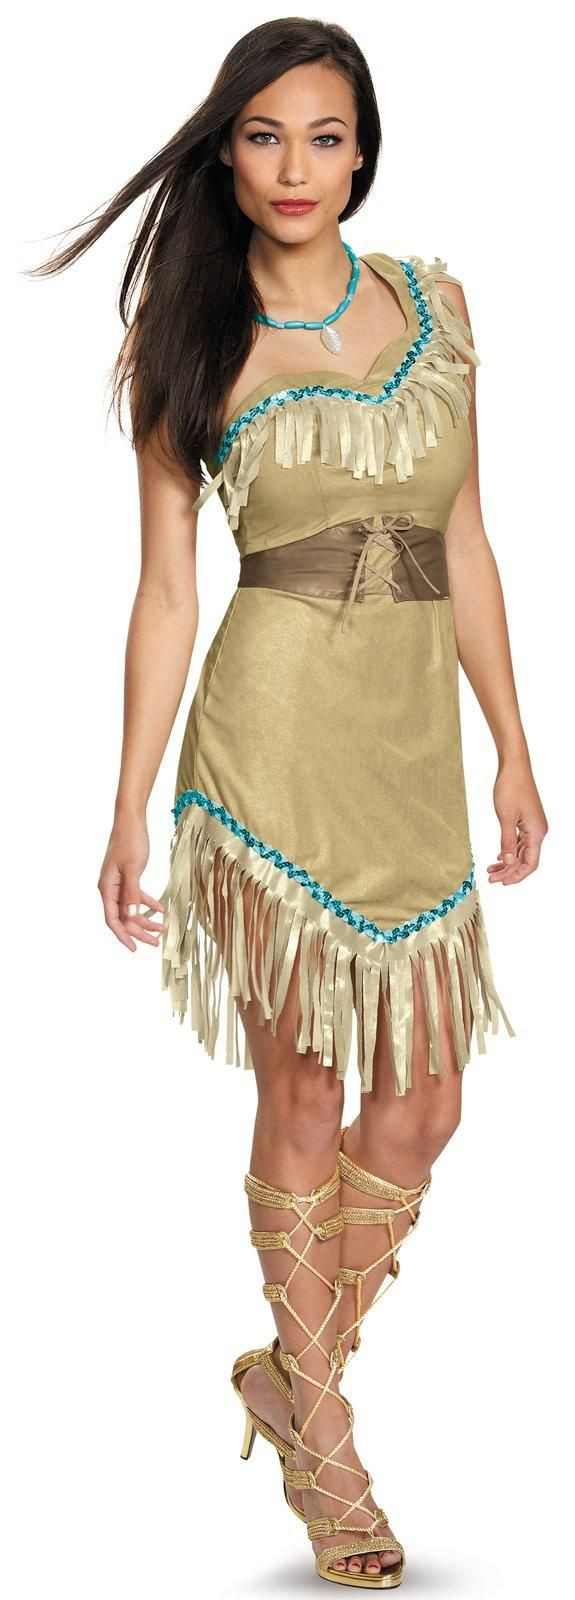 Best ideas about DIY Pocahontas Halloween Costume
. Save or Pin 1000 ideas about Pocahontas Costume on Pinterest Now.